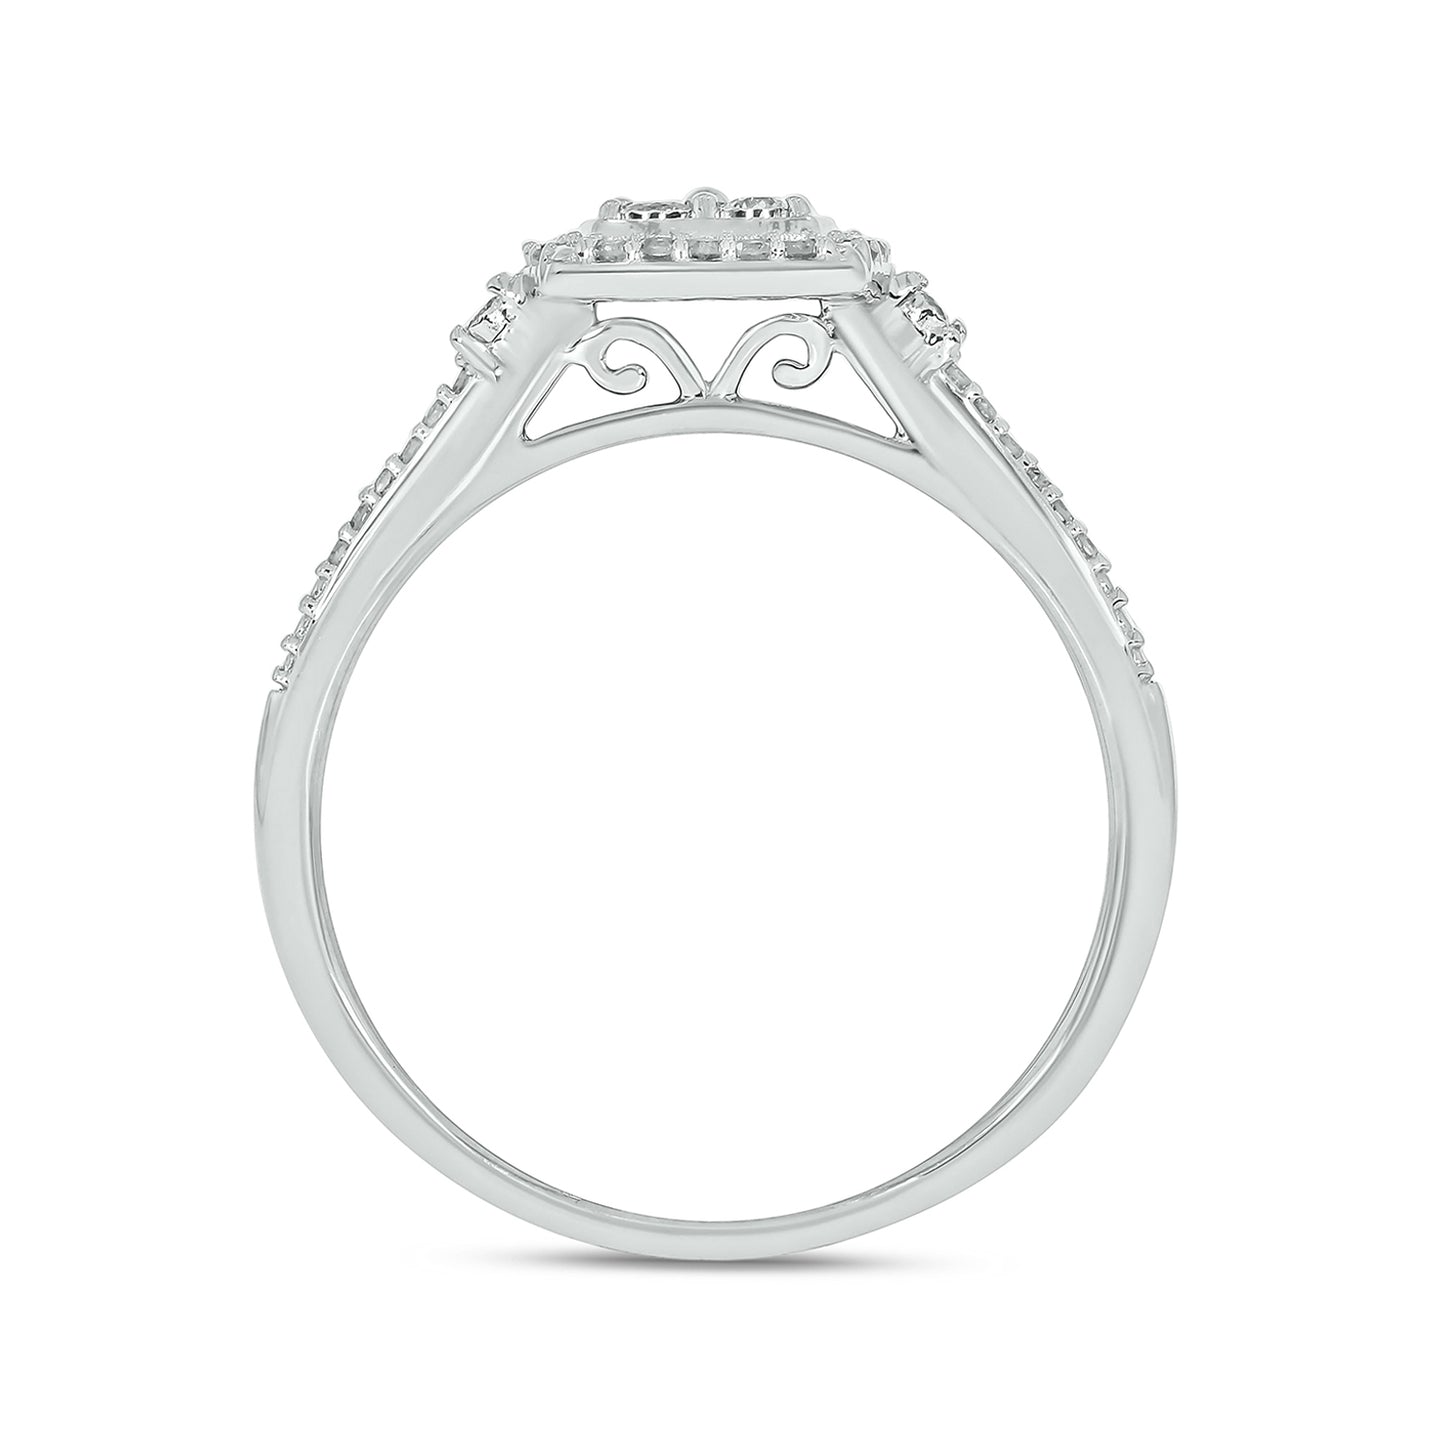 Glamorous Cushion Natural Diamonds Wedding Ring Set in 925 Sterling Silver